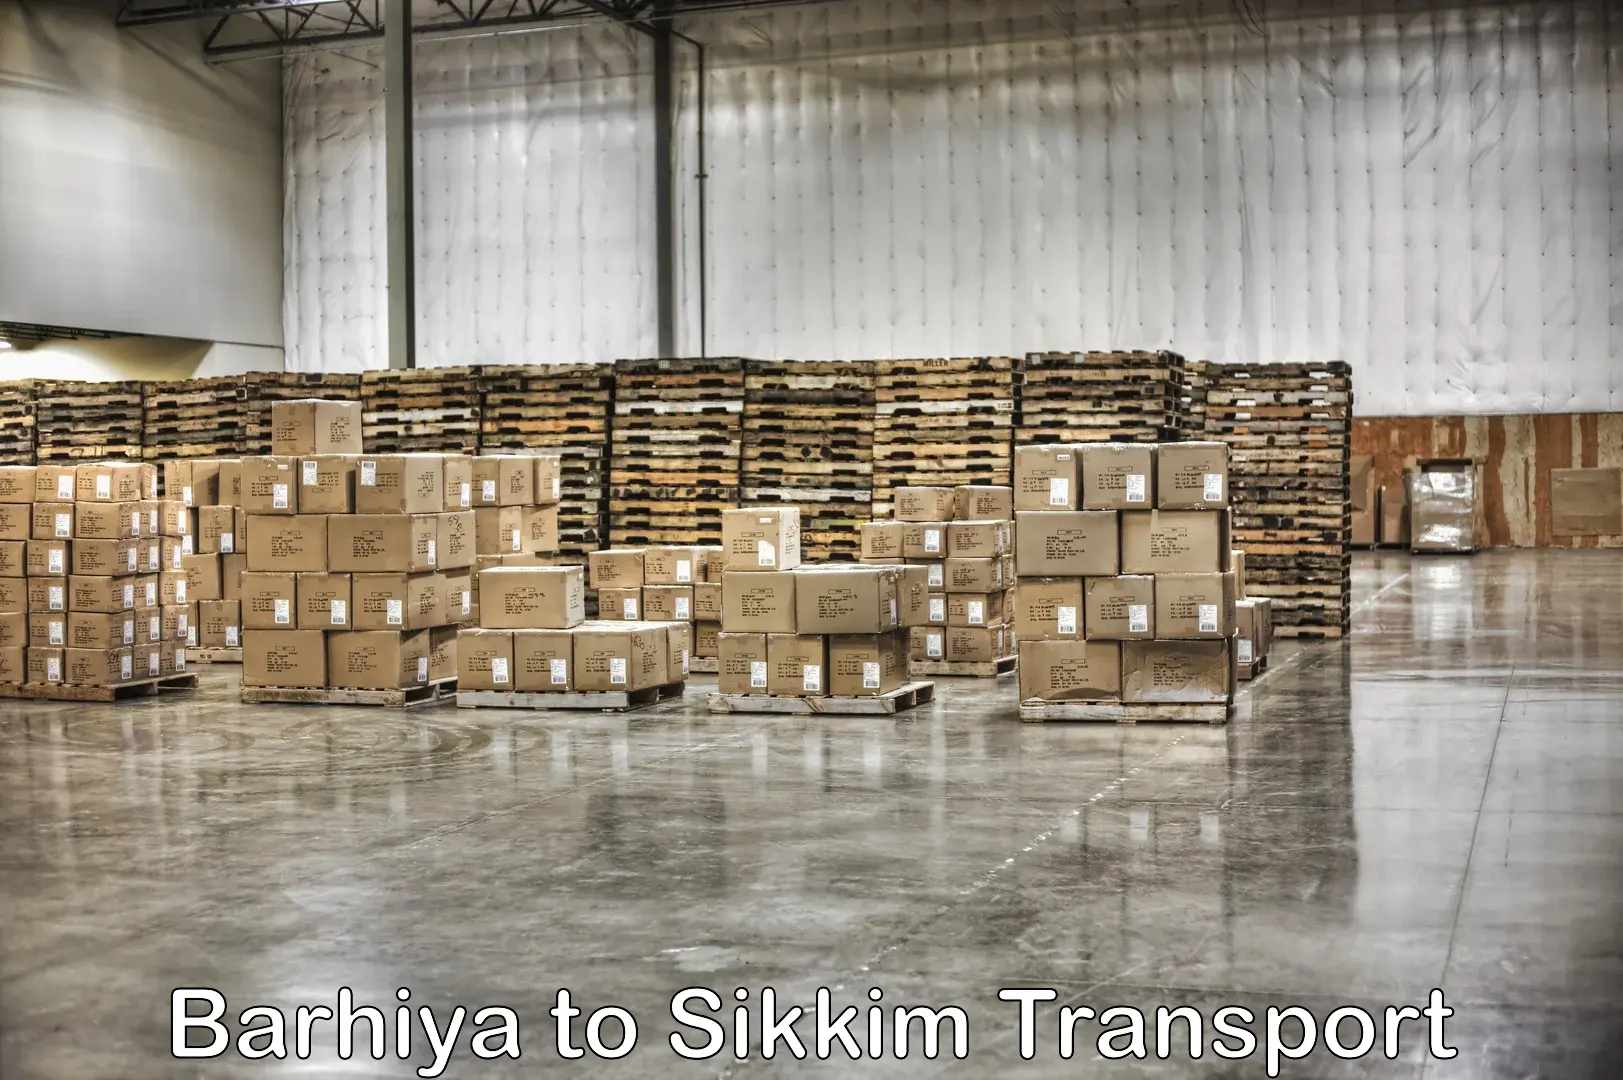 Nearby transport service Barhiya to East Sikkim